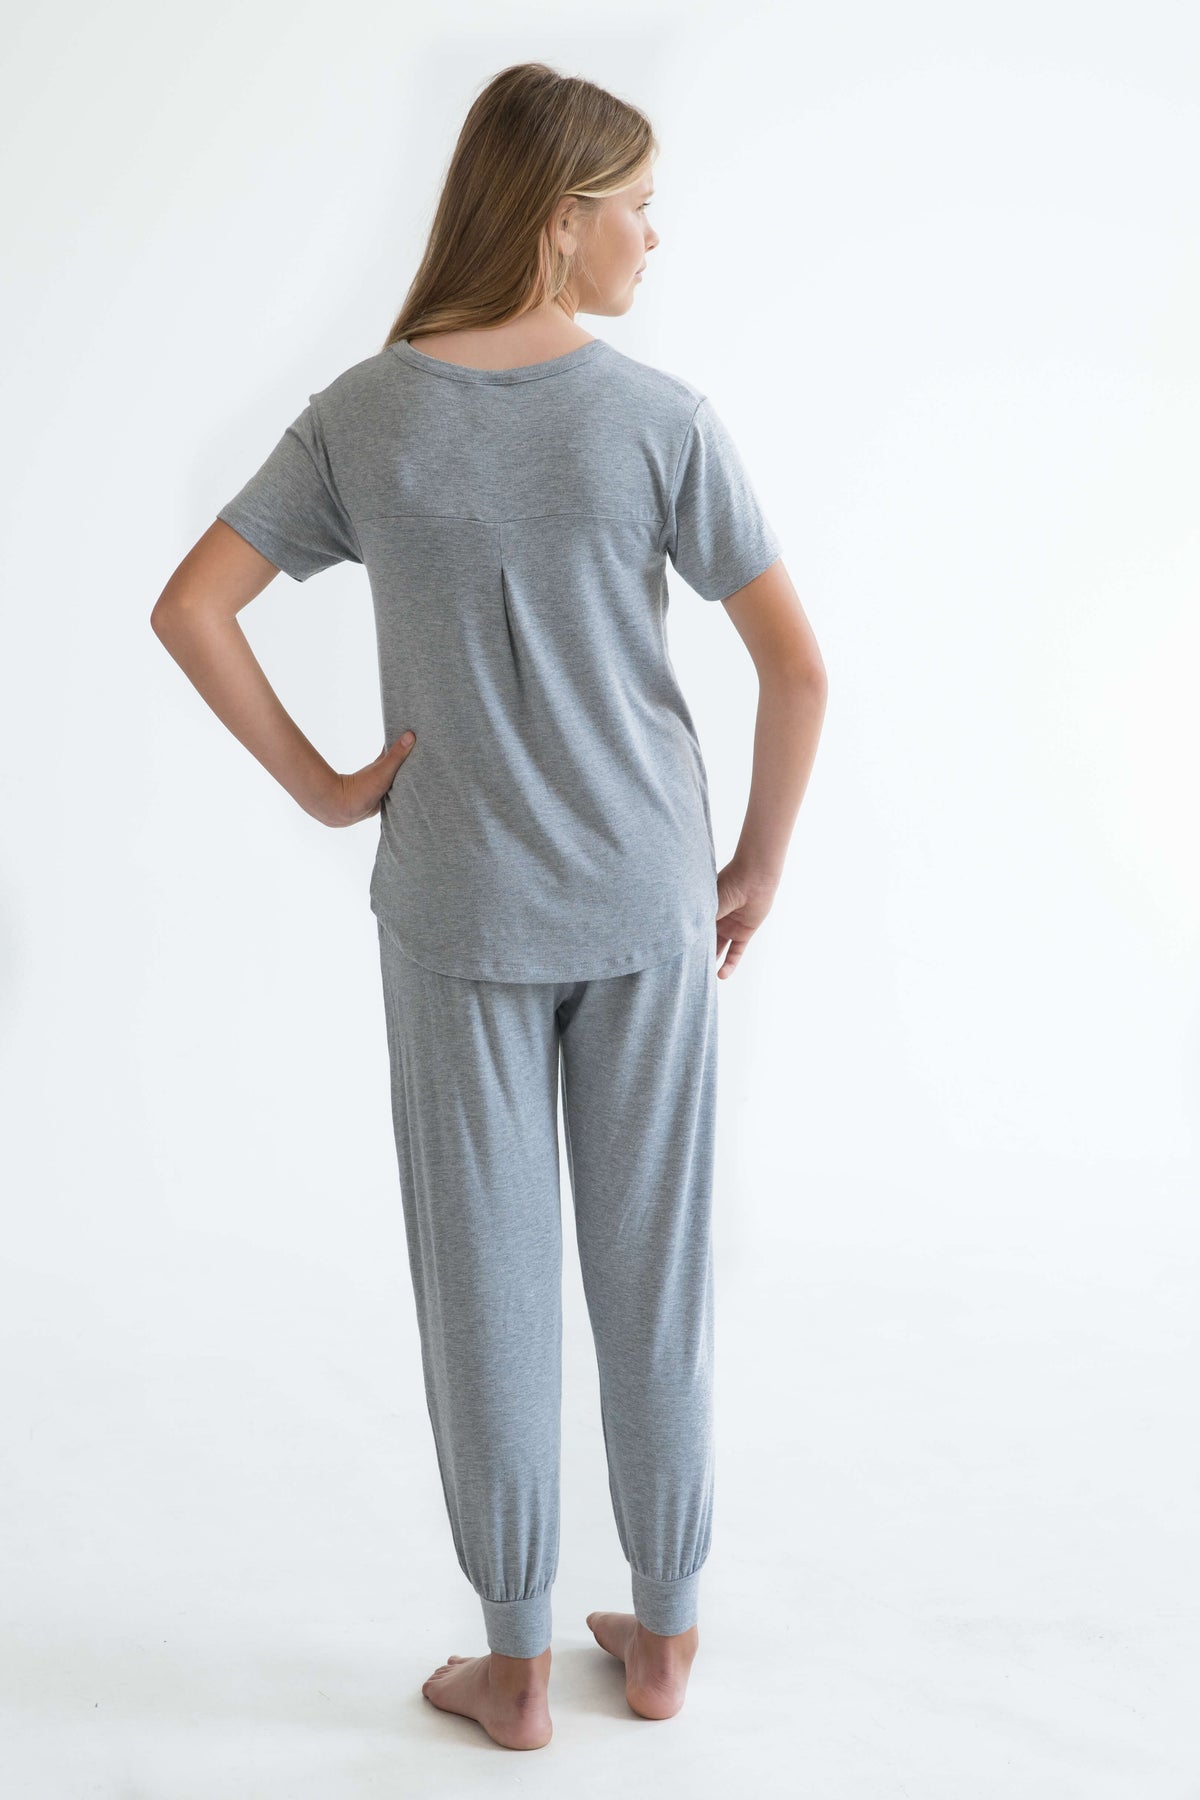 grey teen girls pyjamas set long pants and short sleeve top by Love Haidee Australia back